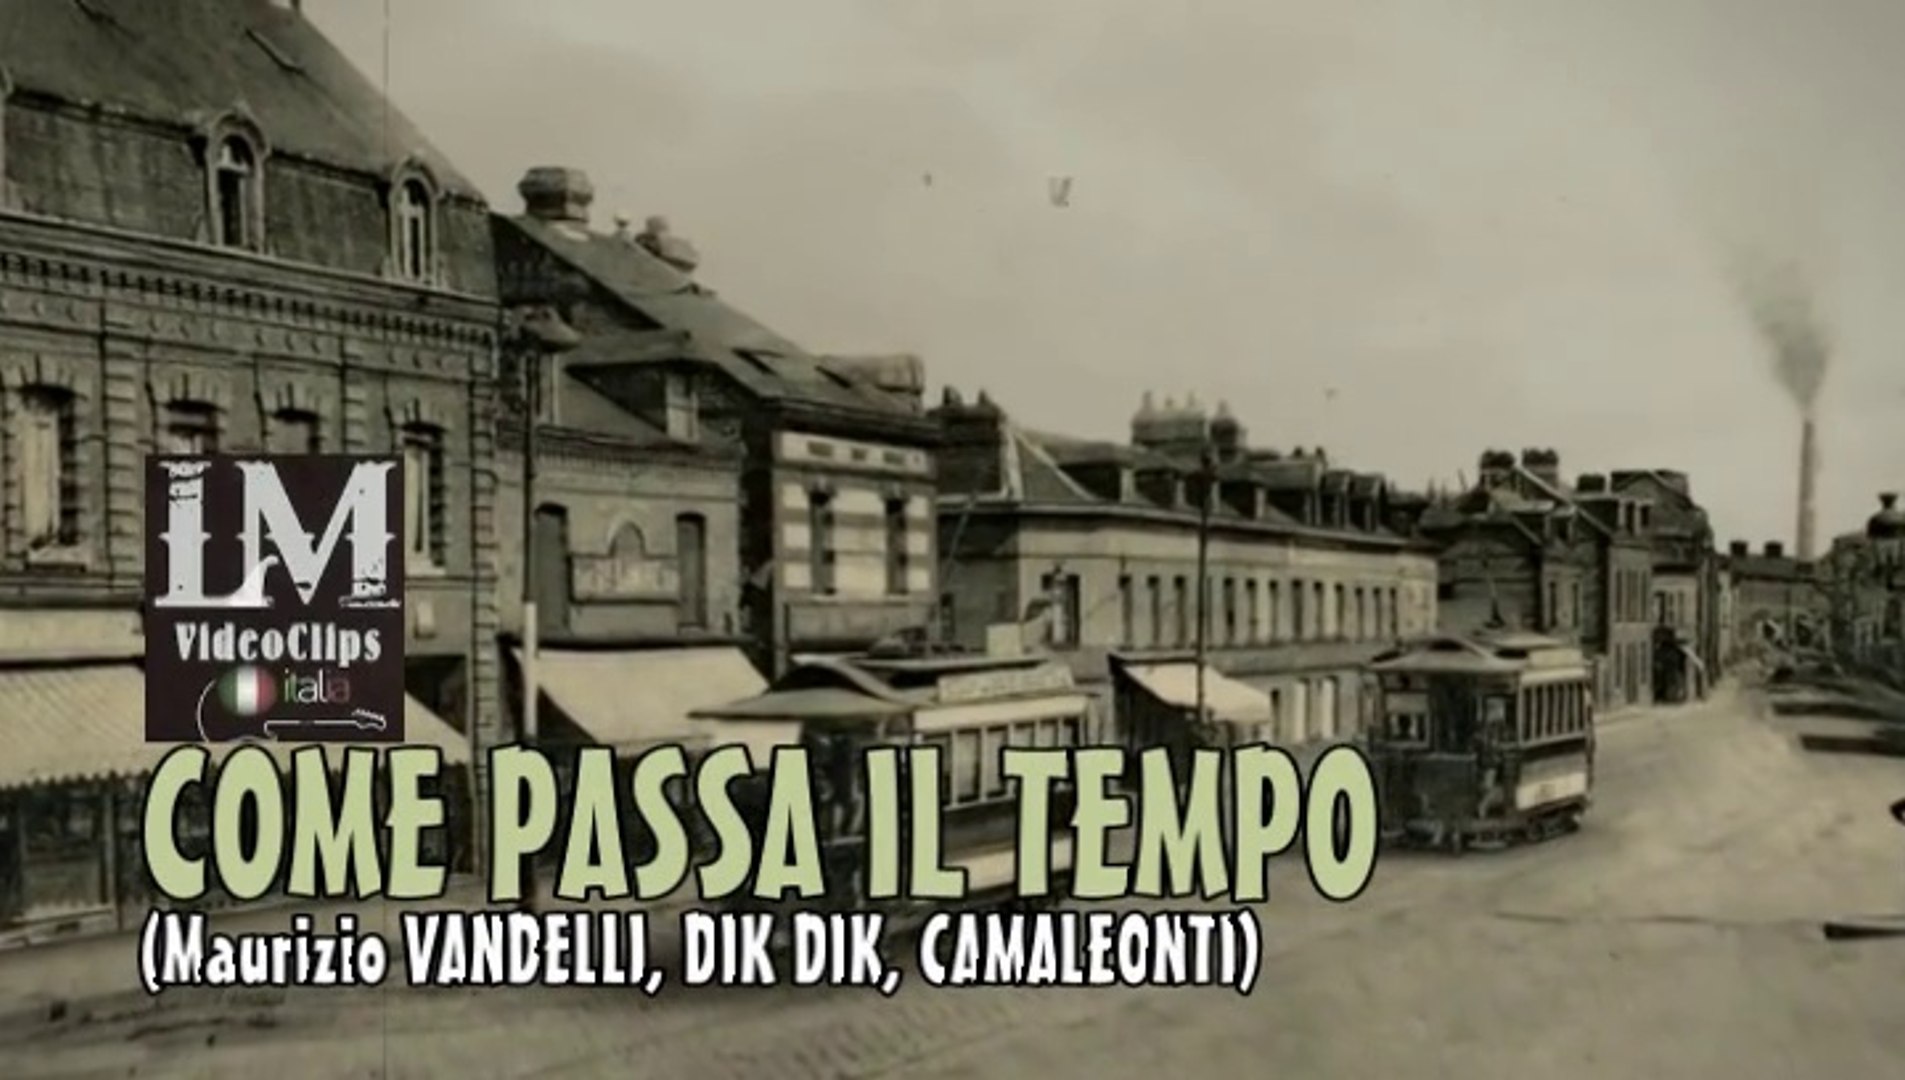 COME PASSA IL TEMPO (Vandelli Dik Dik Camaleonti) - Video Dailymotion